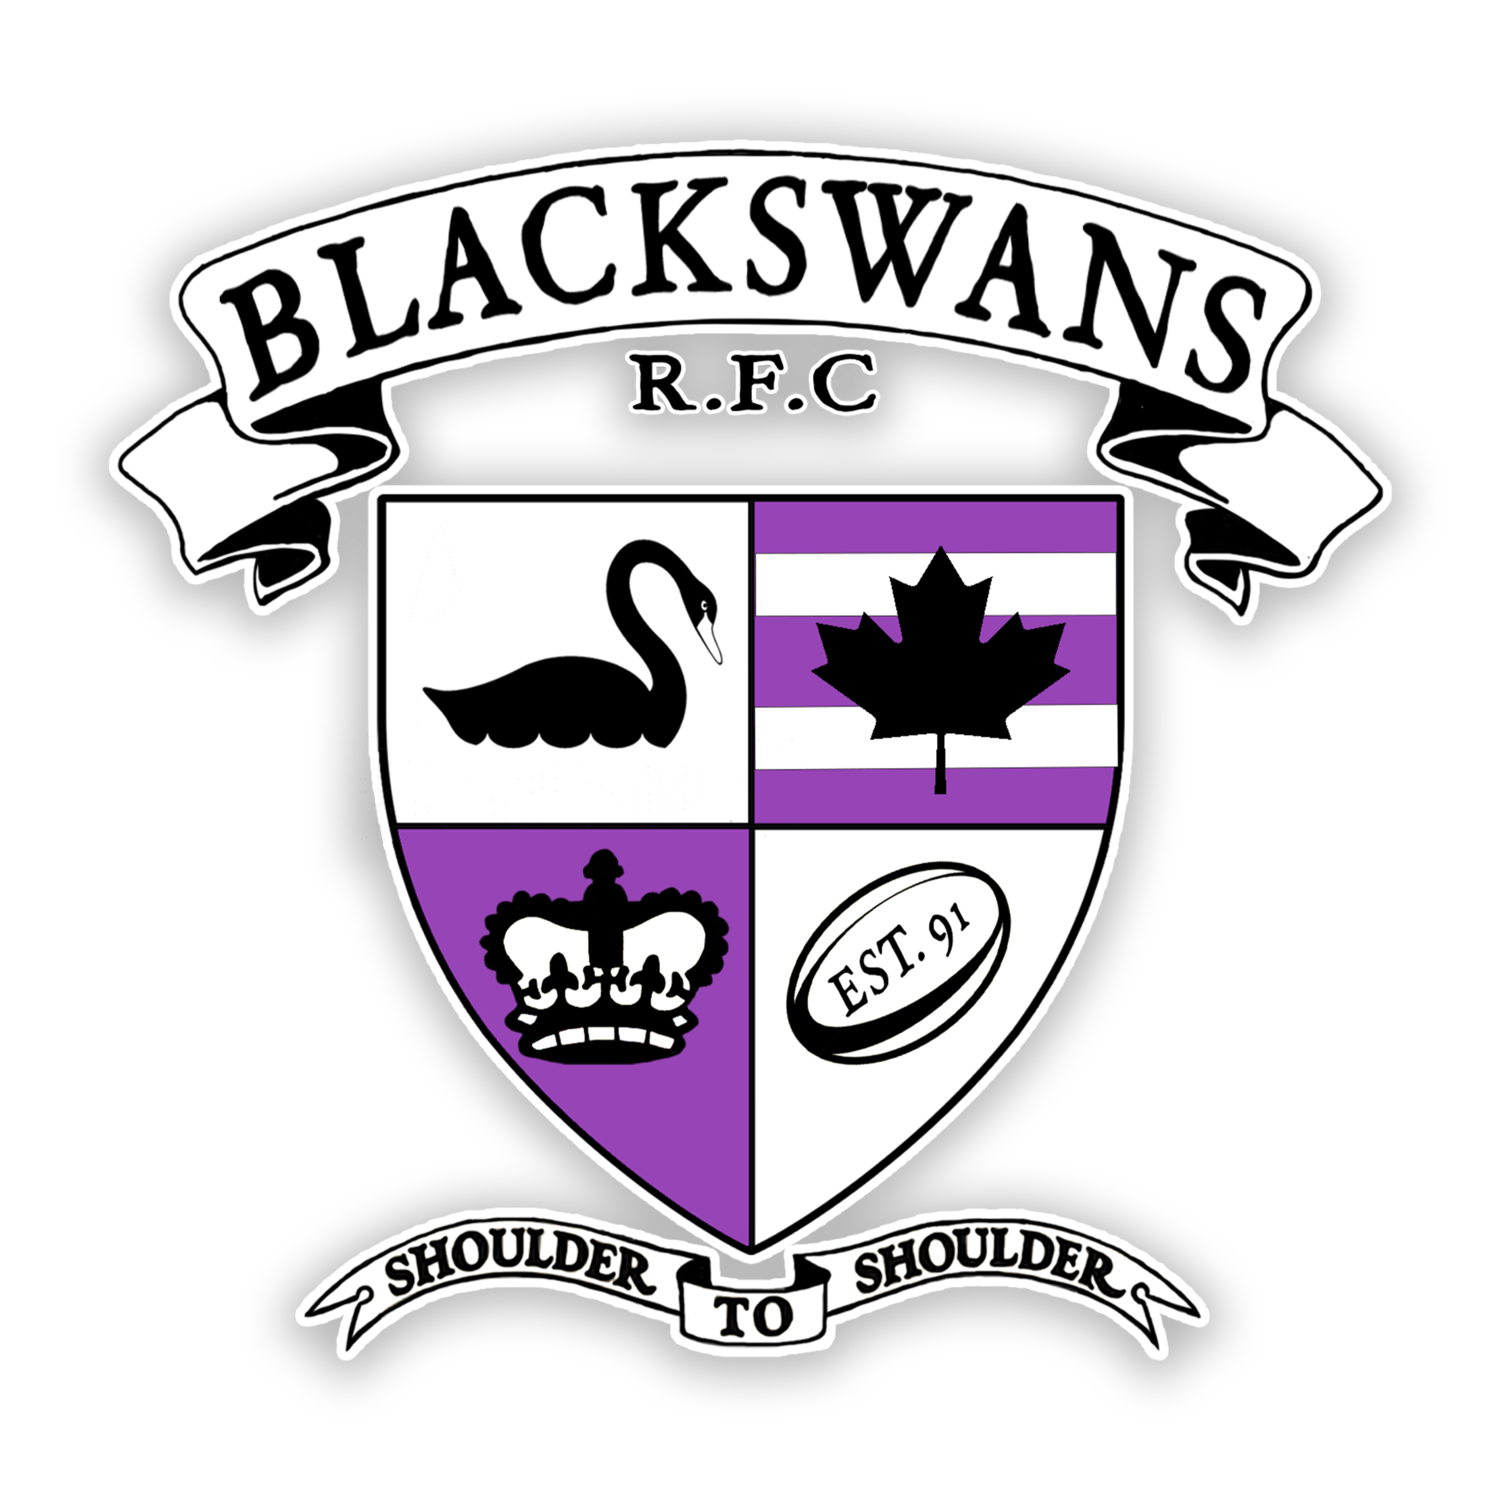 Blackswans RFC